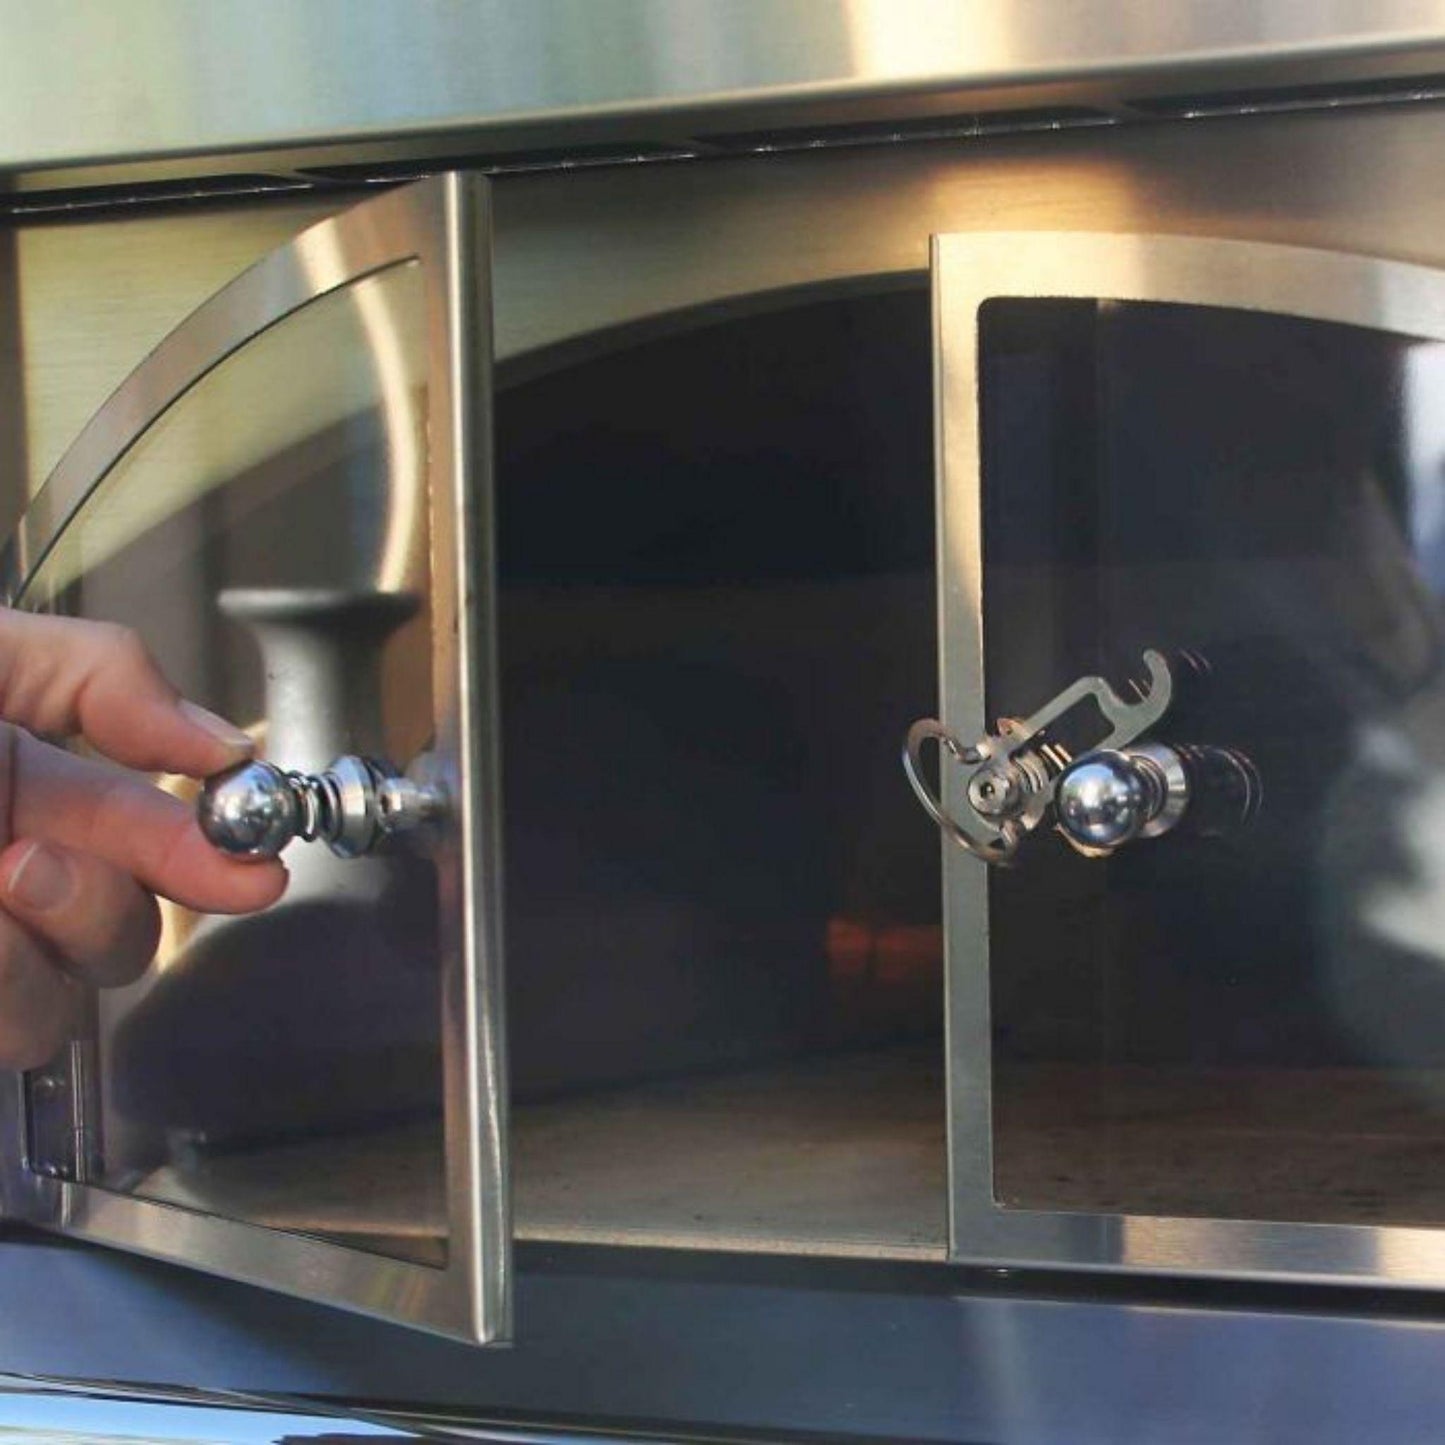 Alfresco 30" Blue Lilac Gloss Liquid Propane Pizza Oven for Built-in Installations